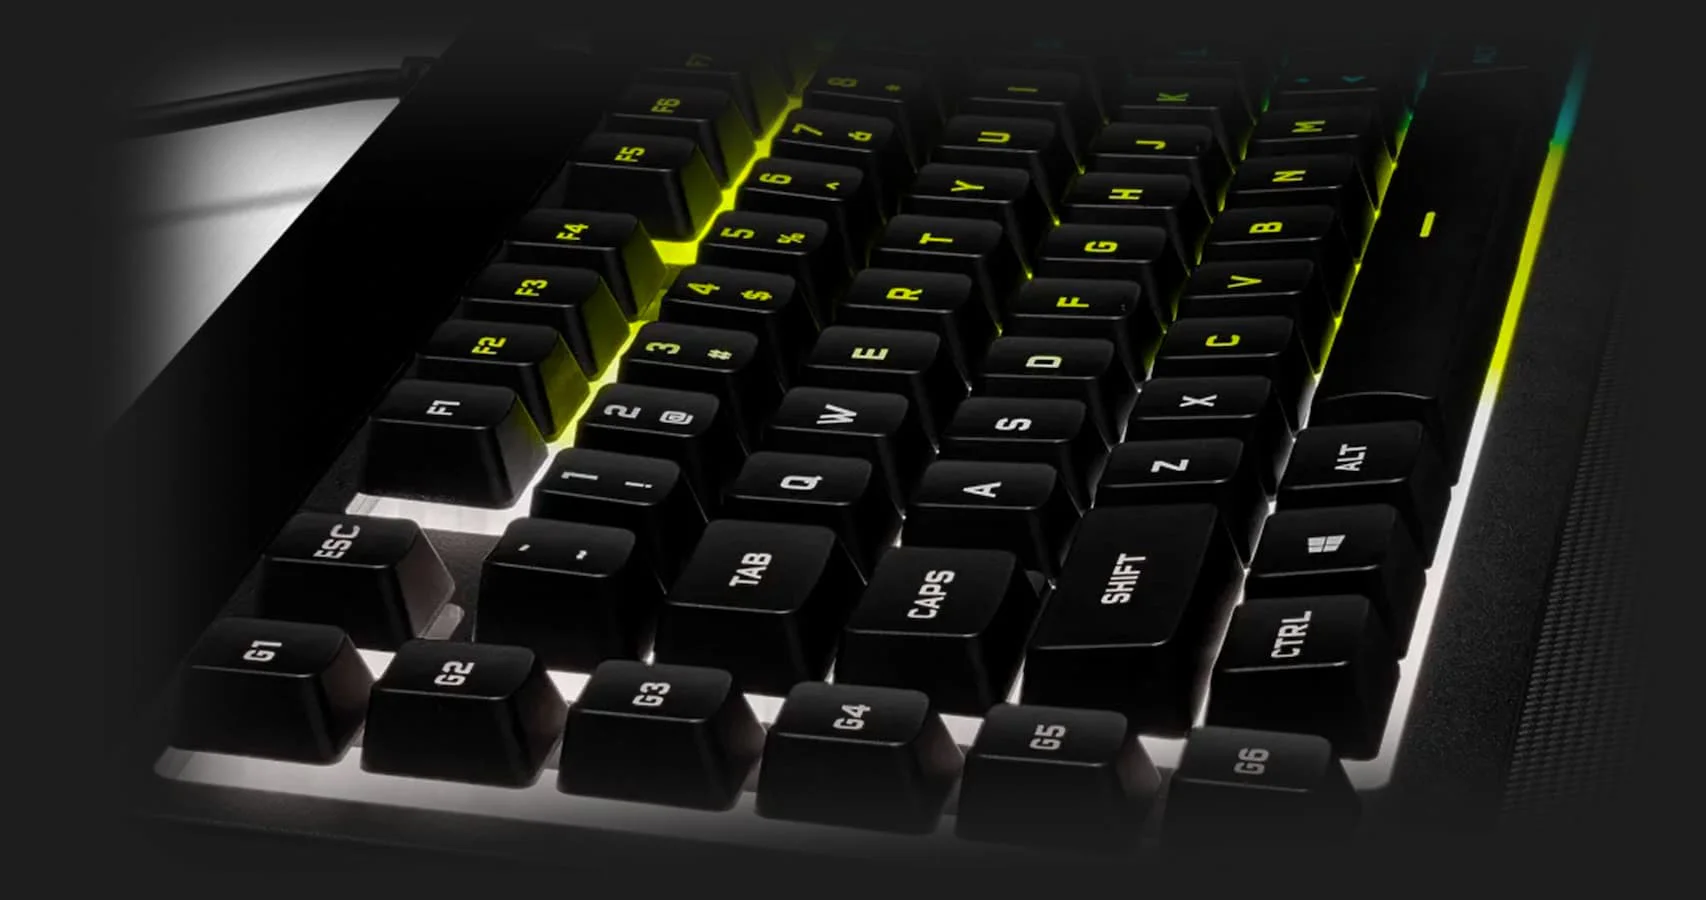 Клавиатура игровая Corsair K55 Pro XT RGB (Black)